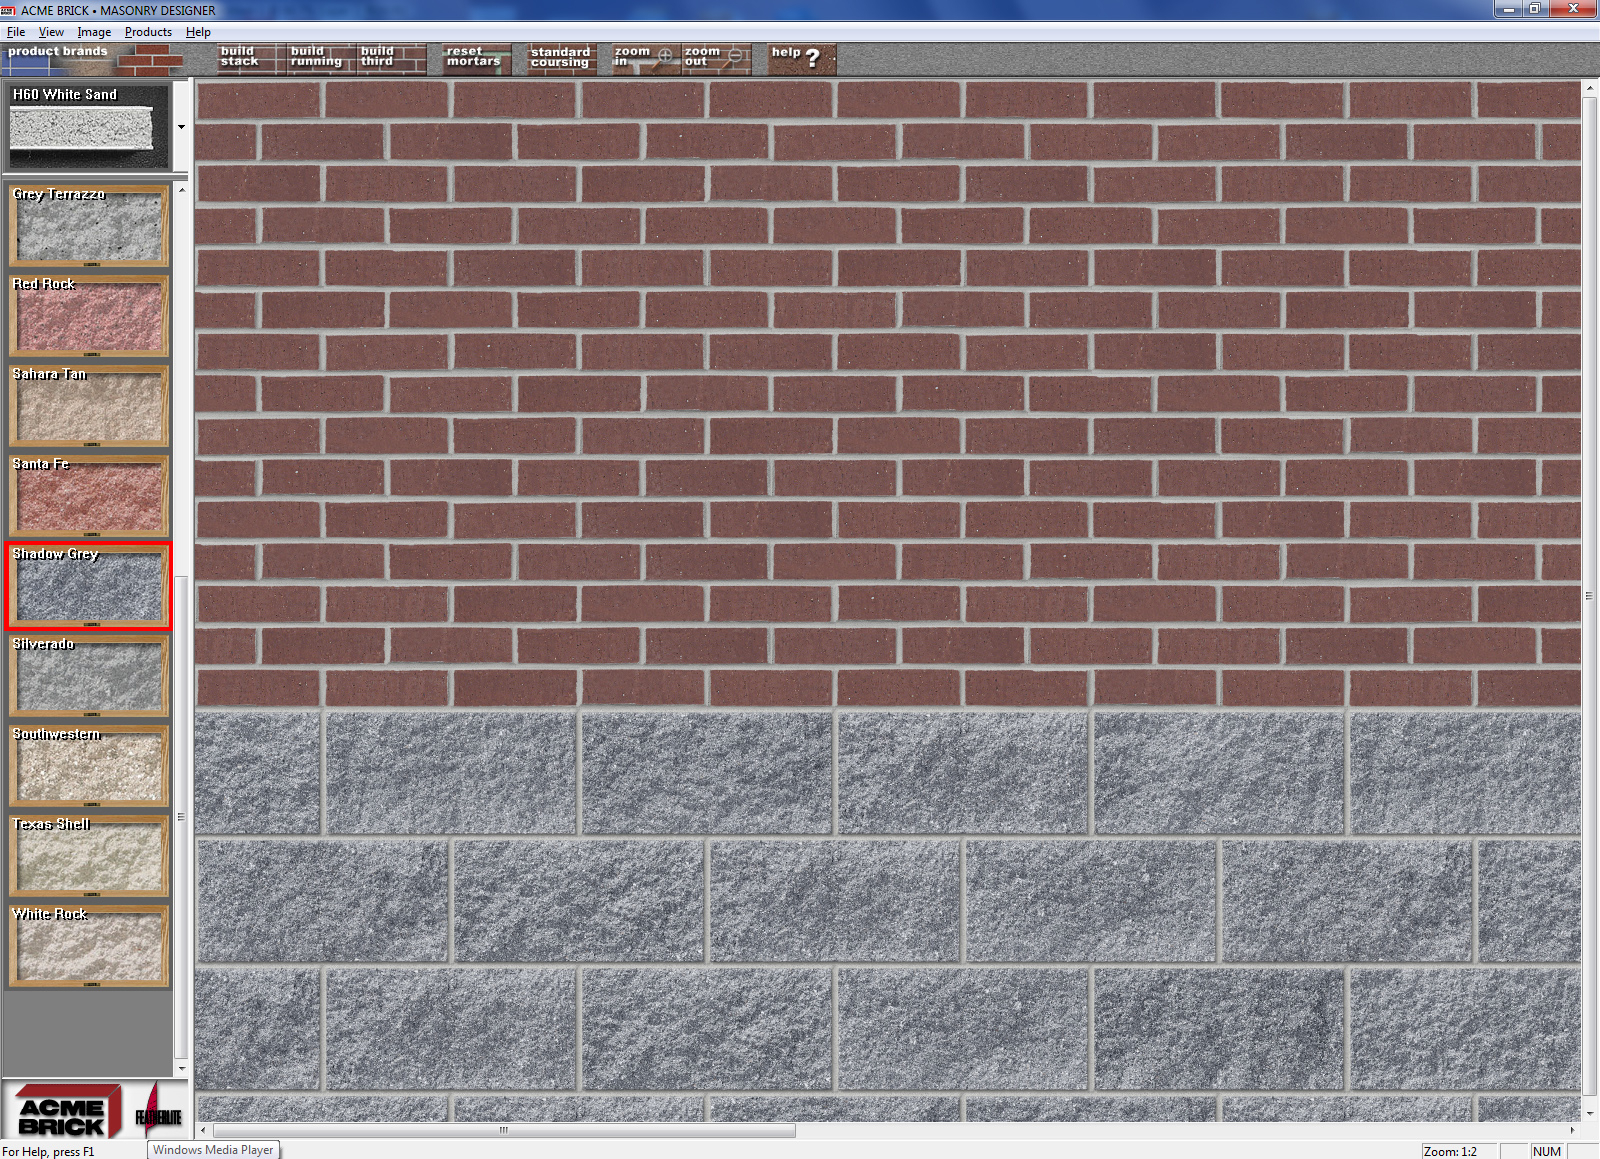 Masonry Shear Wall Design Spreadsheet intended for Acme Bricks Masonry Designer Design Software Expands To, Masonry